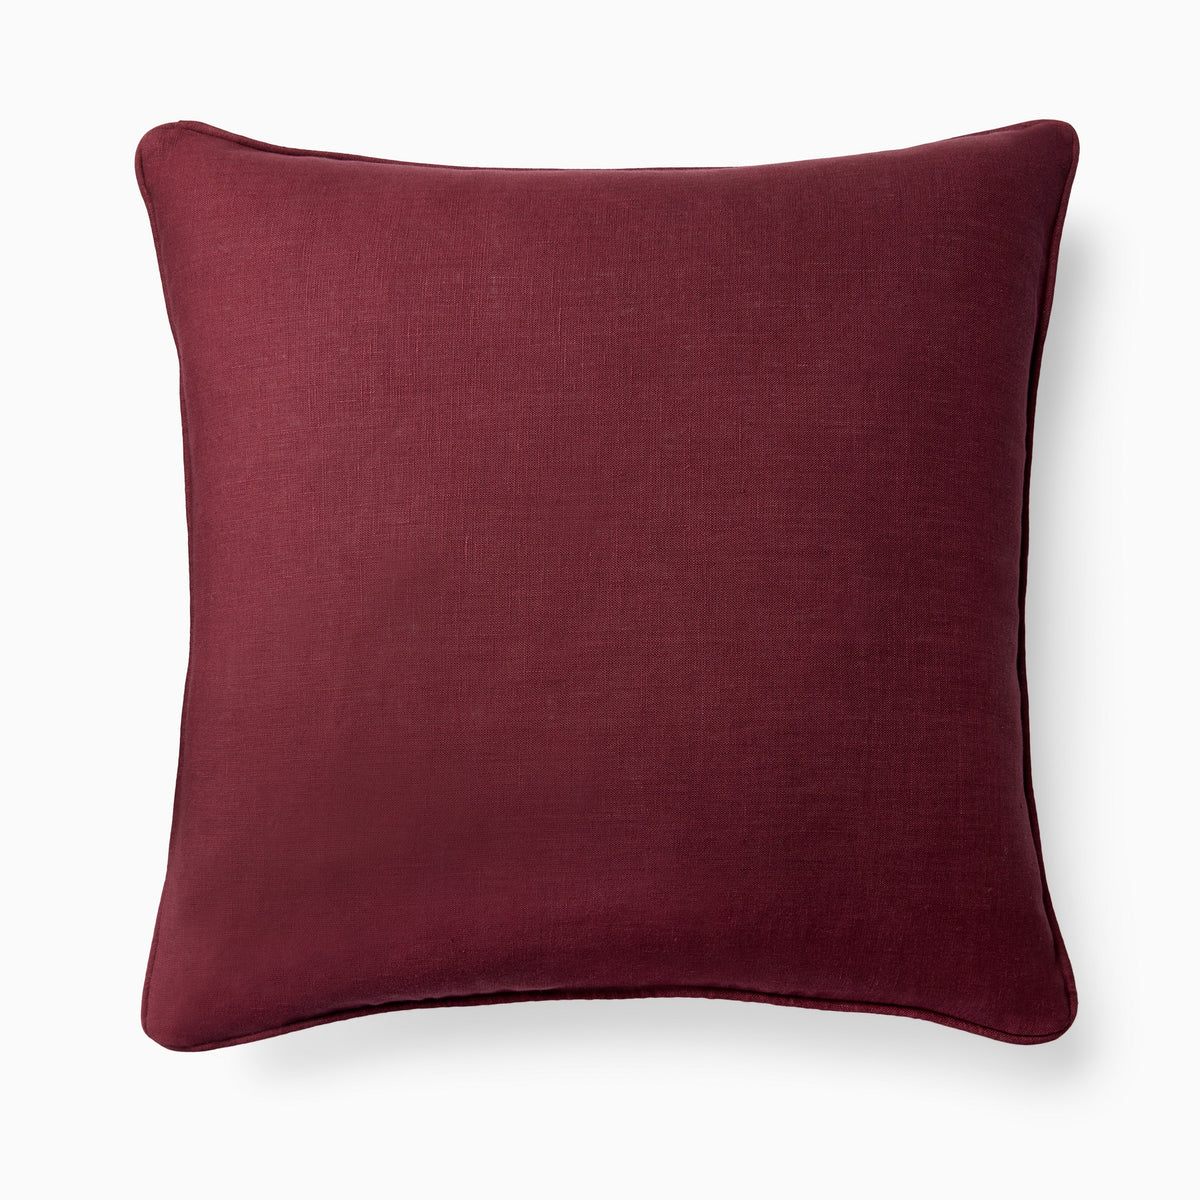 Clear Image of Sferra Manarola Decorative Pillow in Pink/Merlot Back